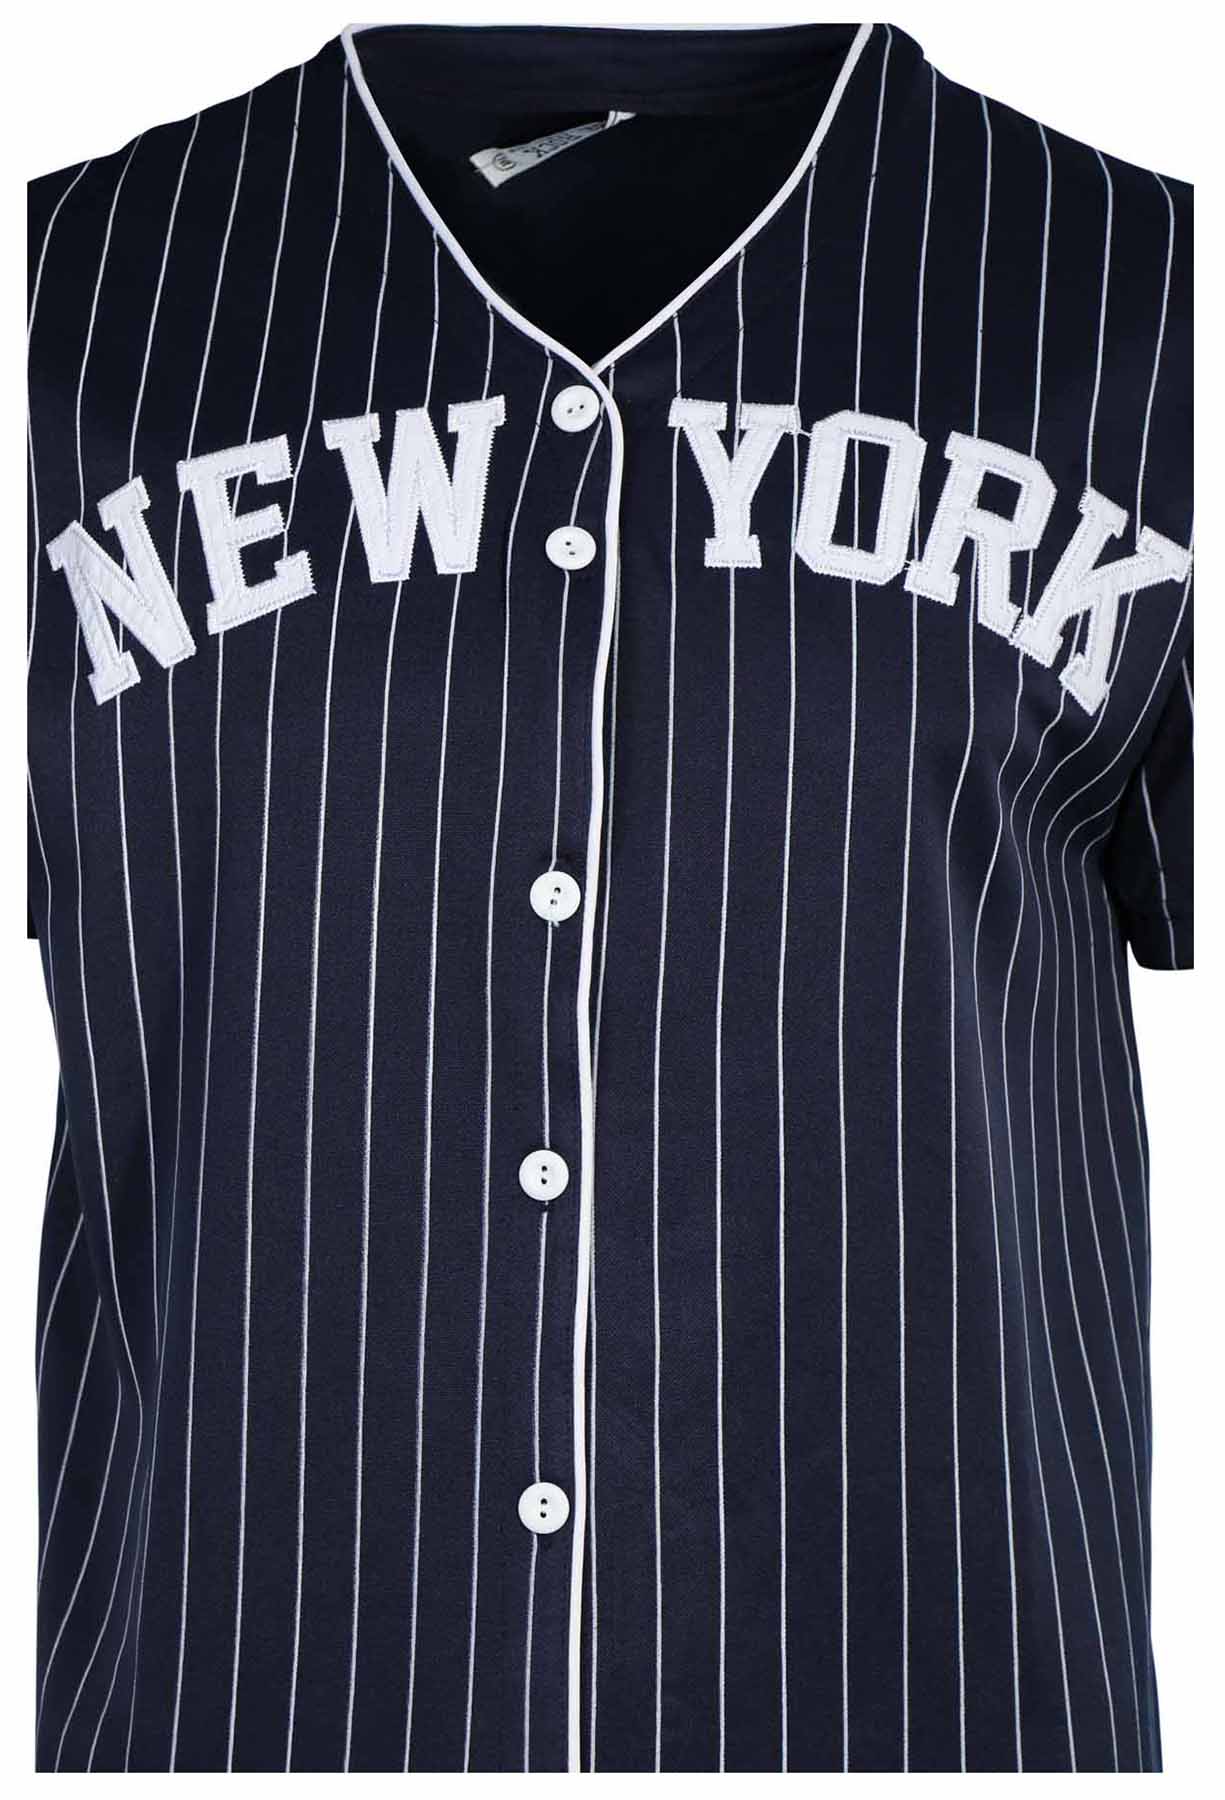 True Rock Men's New York Slim Fit Pinstripe Baseball Jersey (Navy